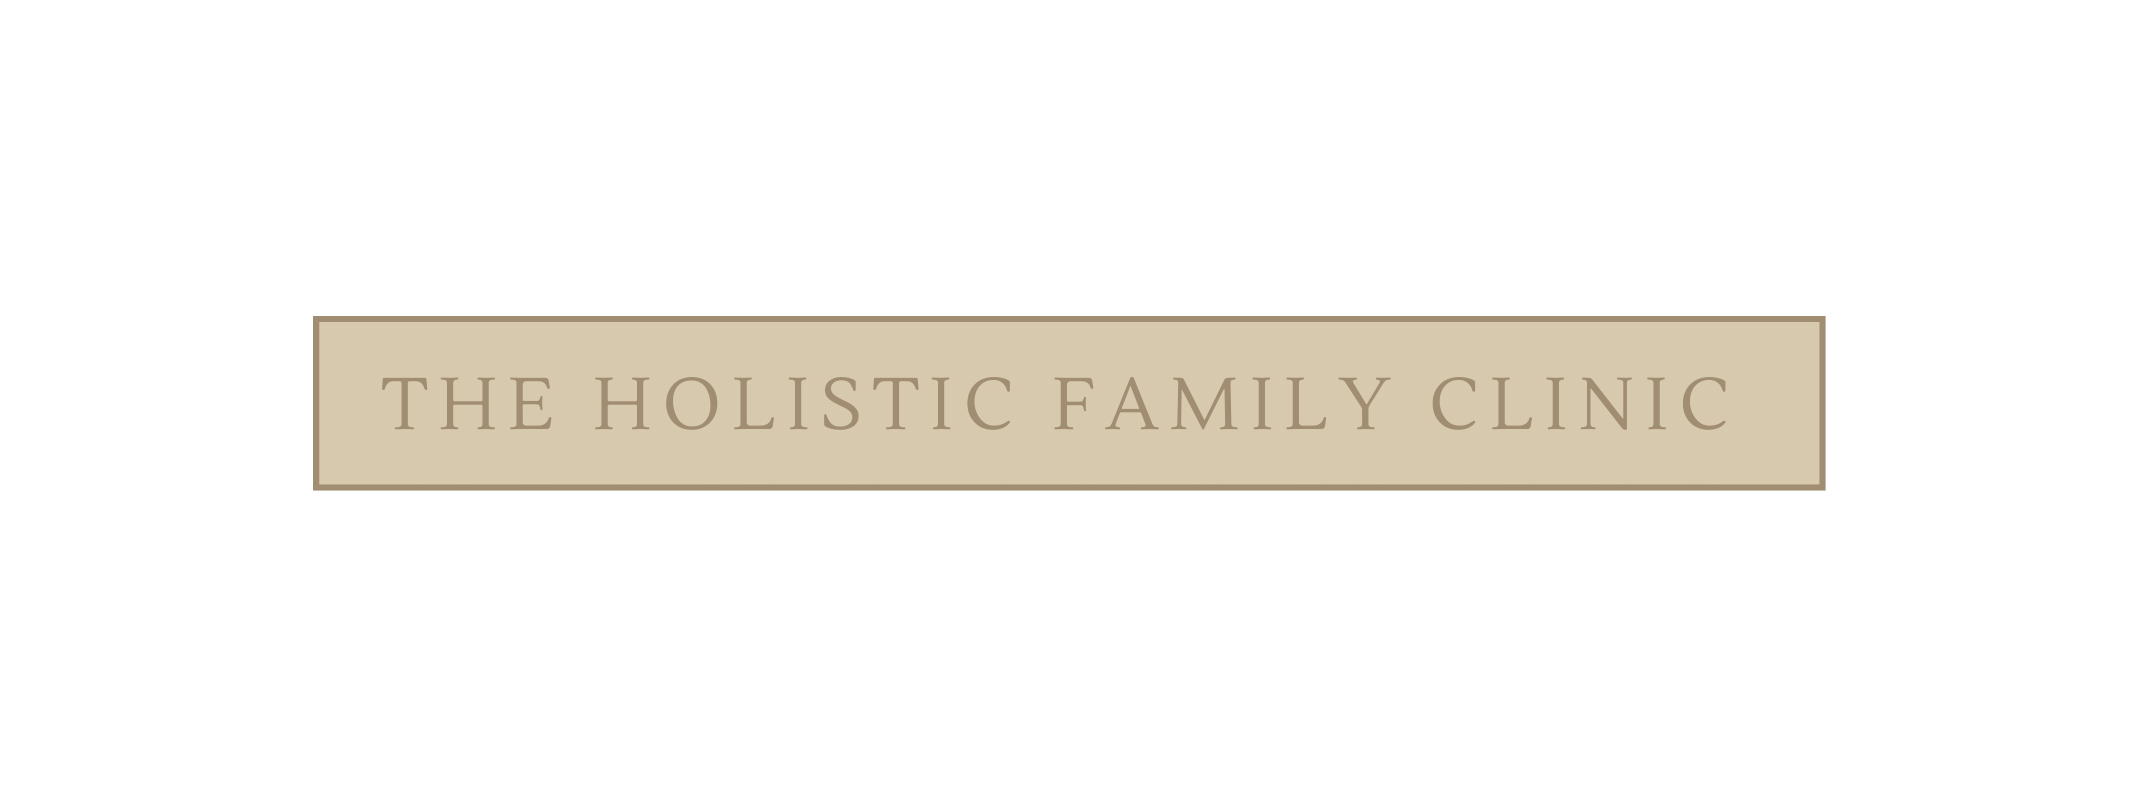 The Holistic Family Clinic's main image